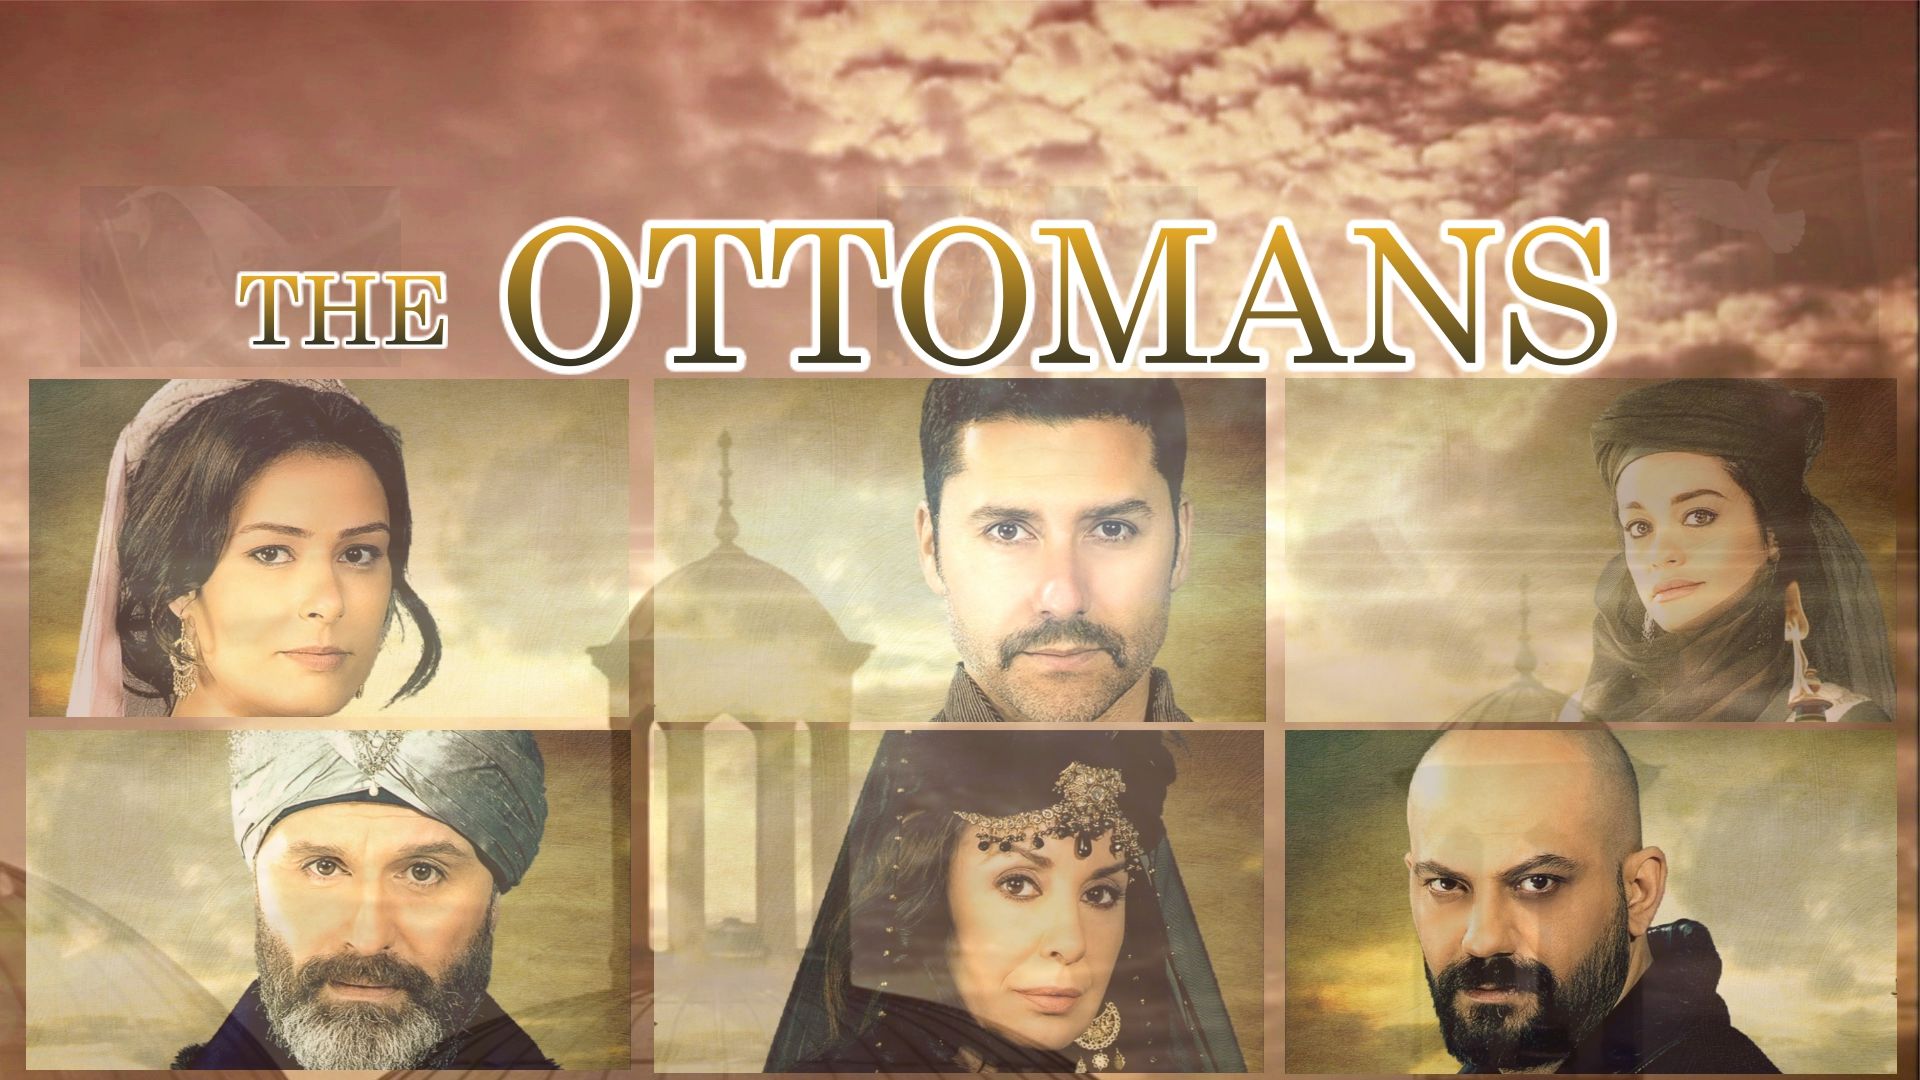 The Ottomans Ep1